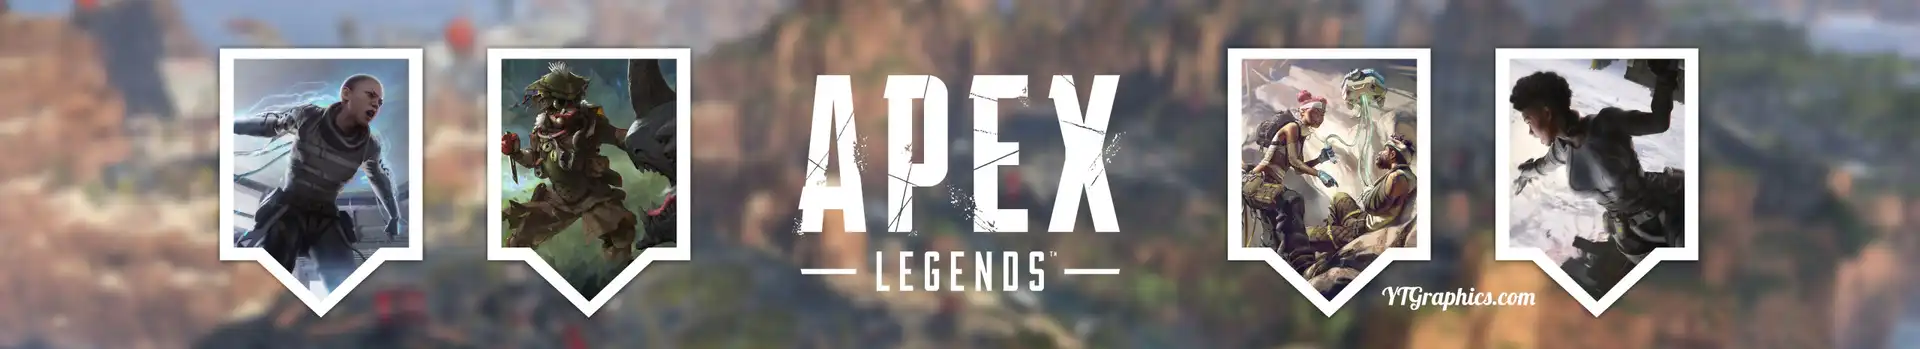 Apex Legends preview